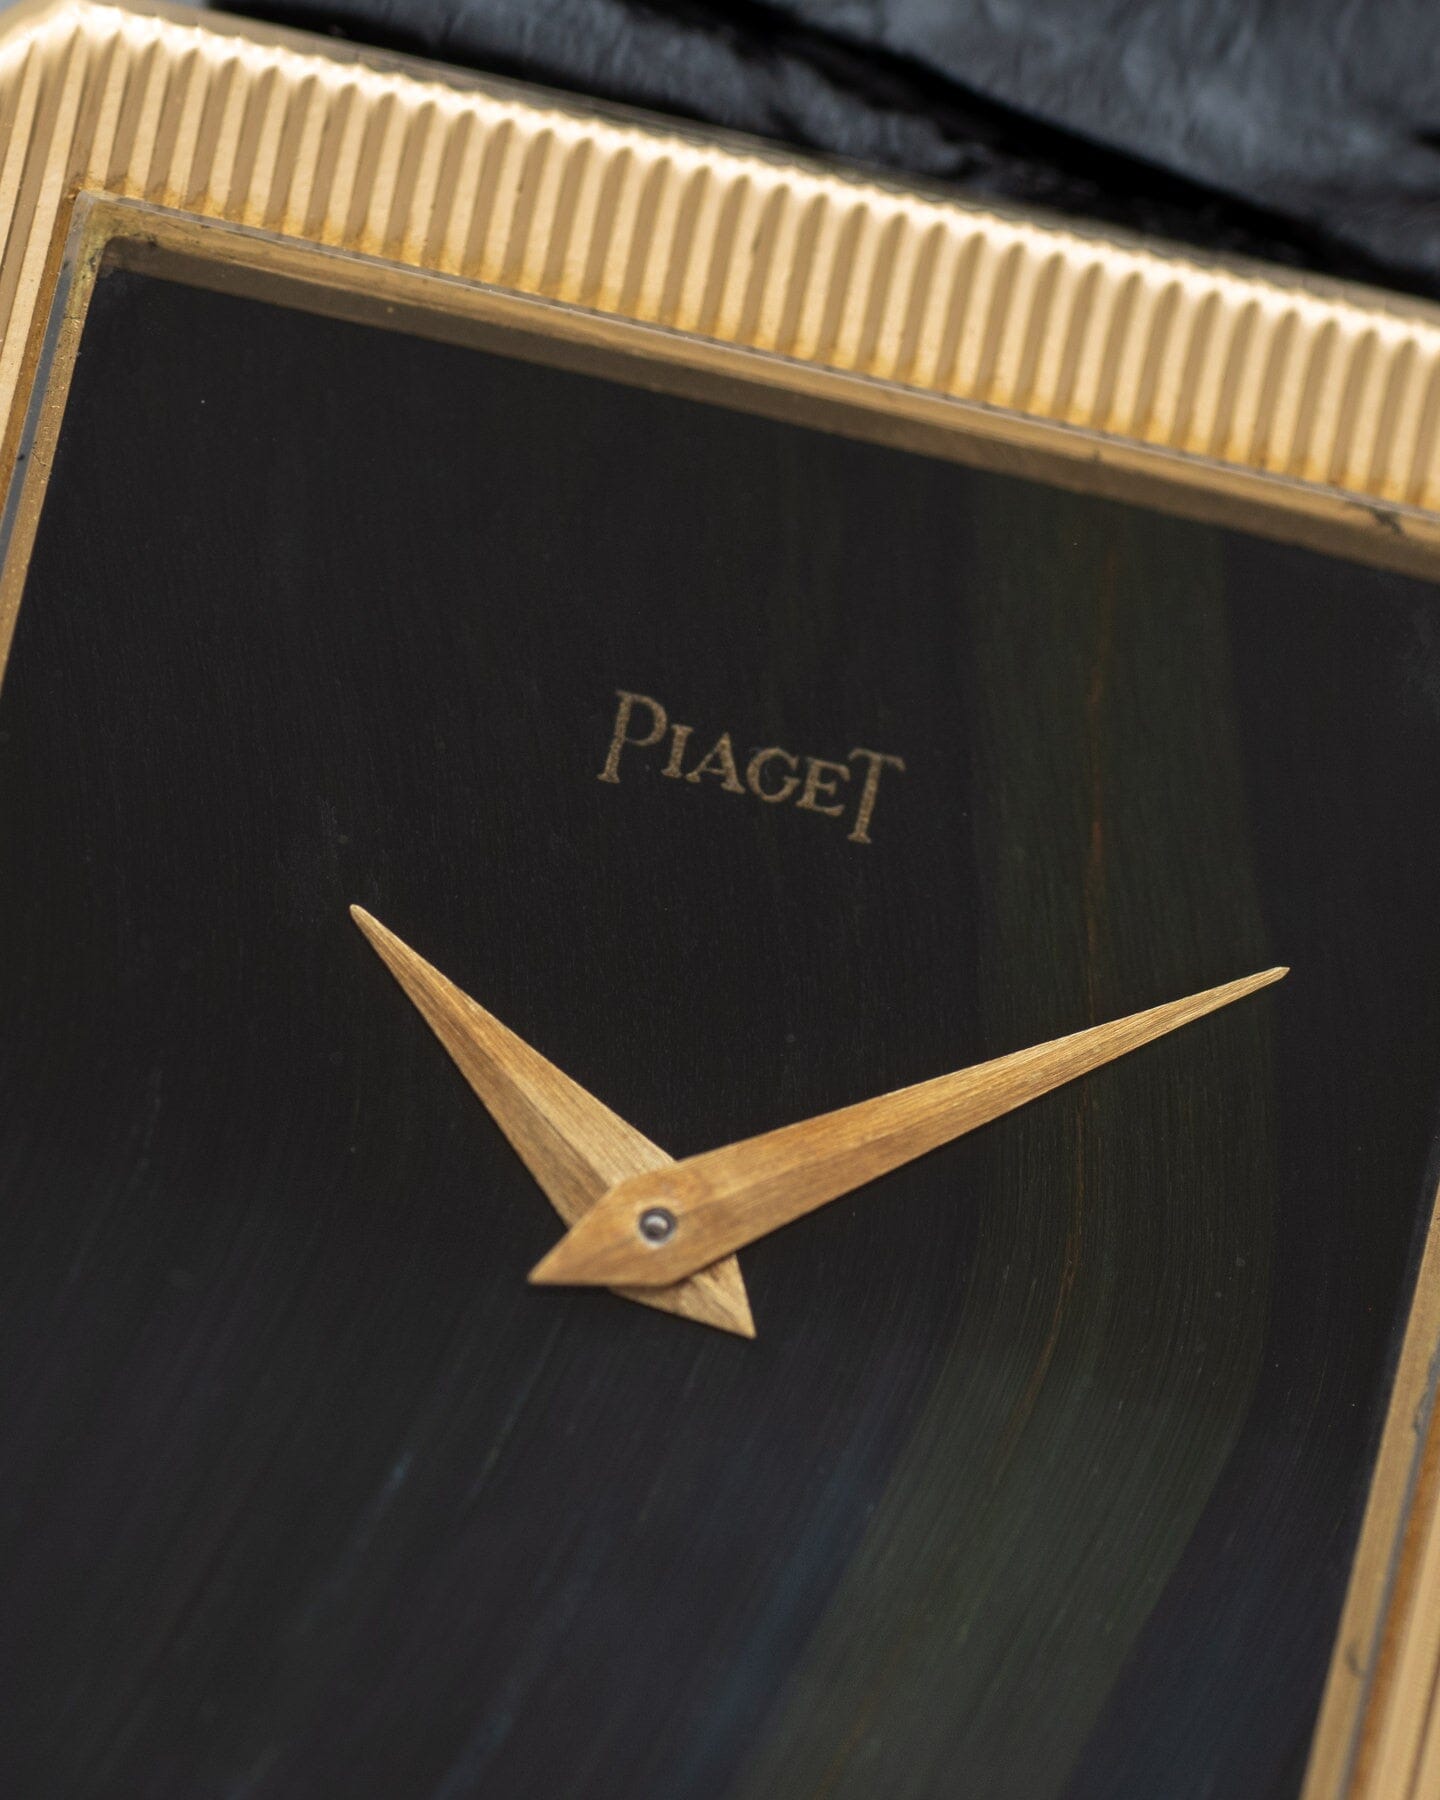 Piaget プロトコール 9154 YG ブルータイガーアイ Watch PIAGET 